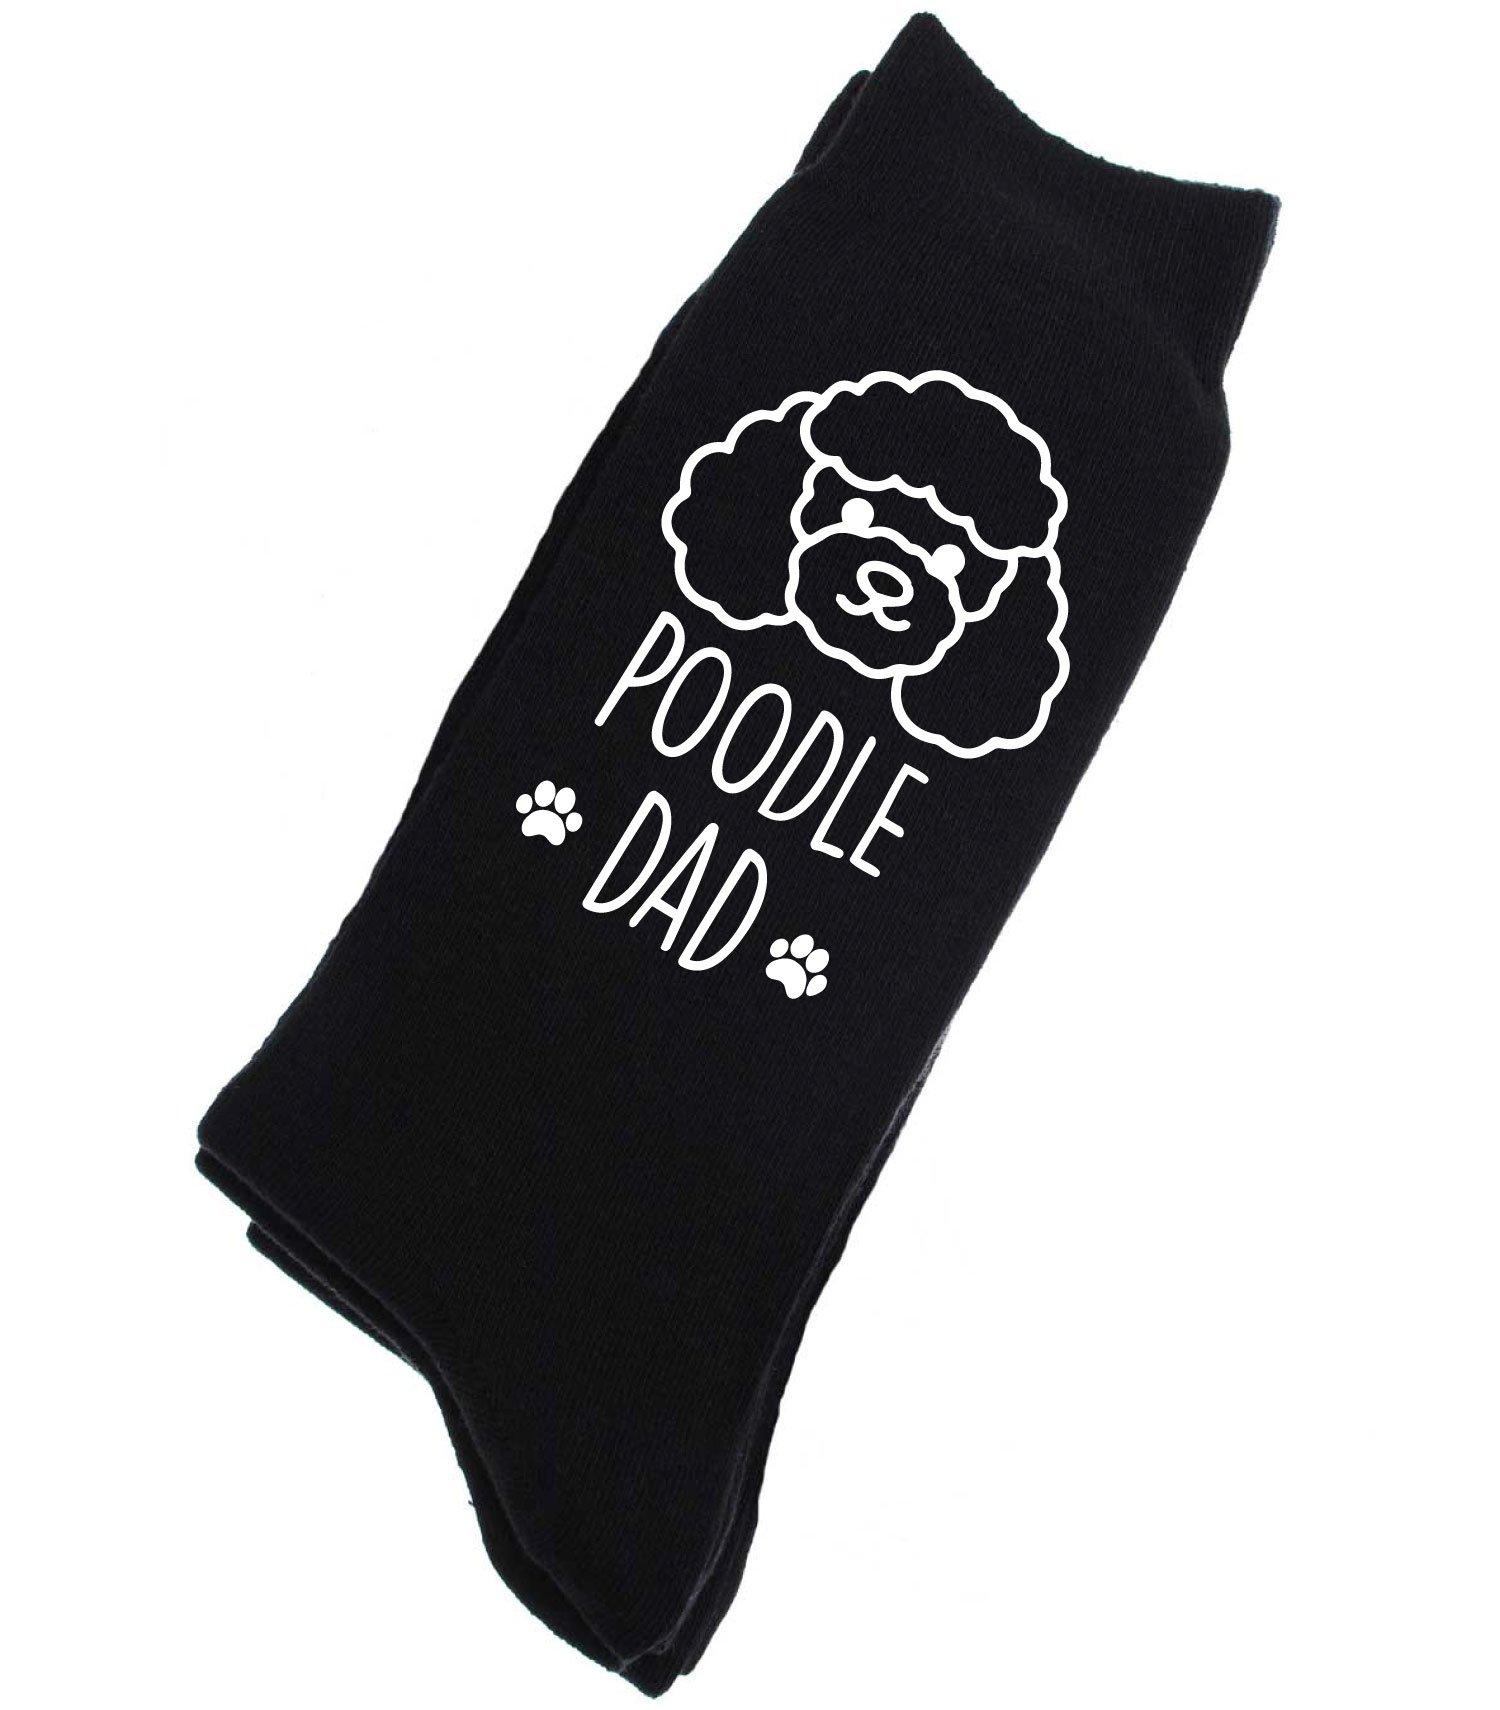 Poodle Dad Black Calf Socks